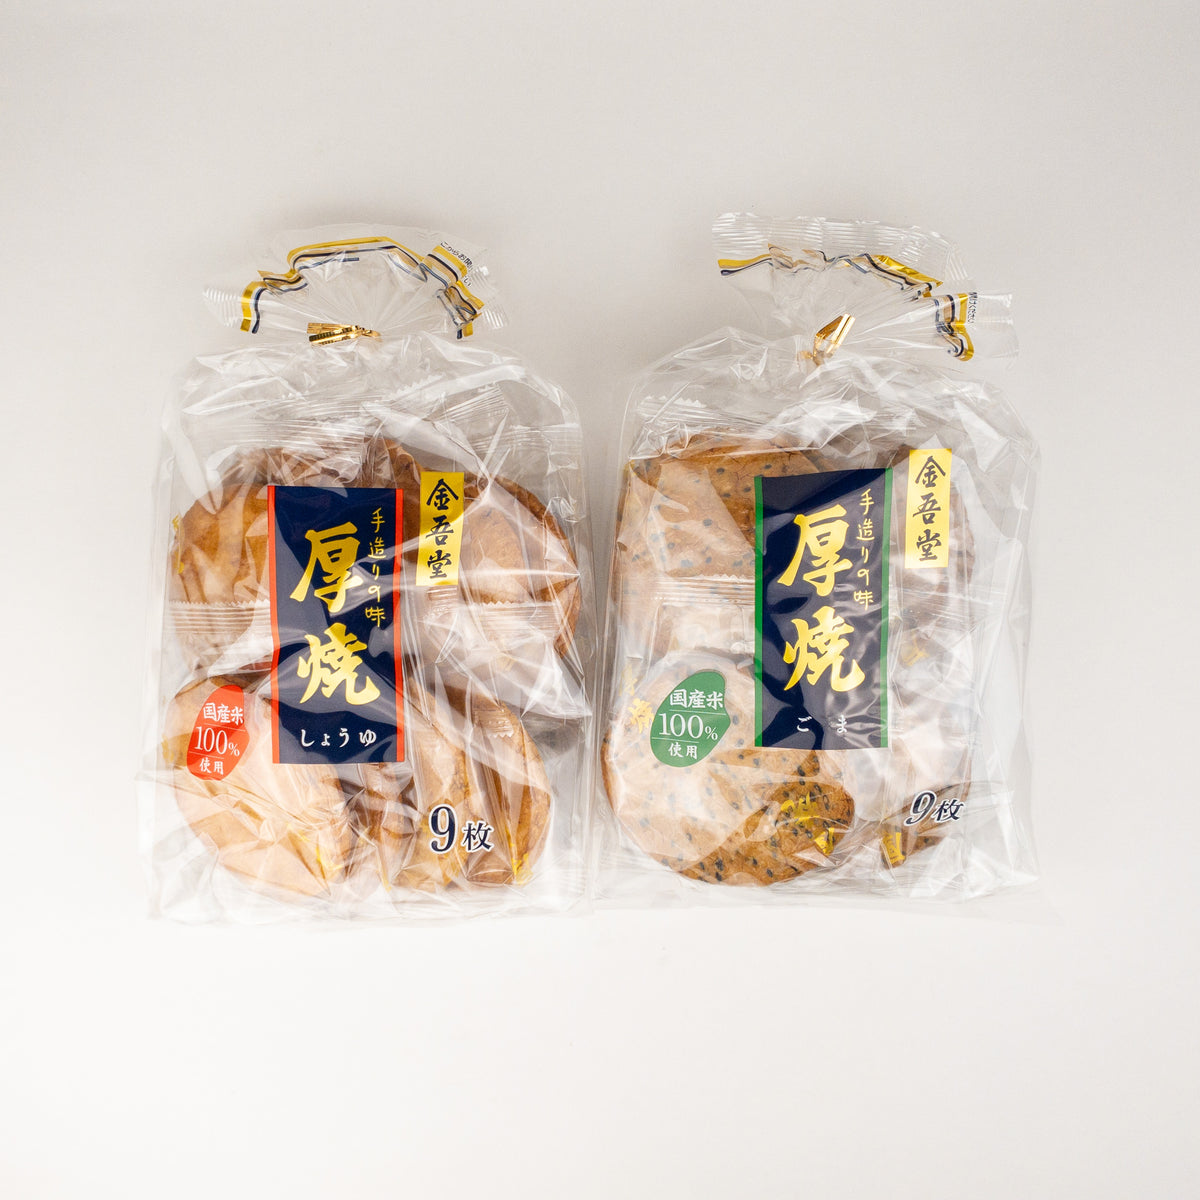 <!--1500--!>Atsuyaki Senbei Rice Cracker